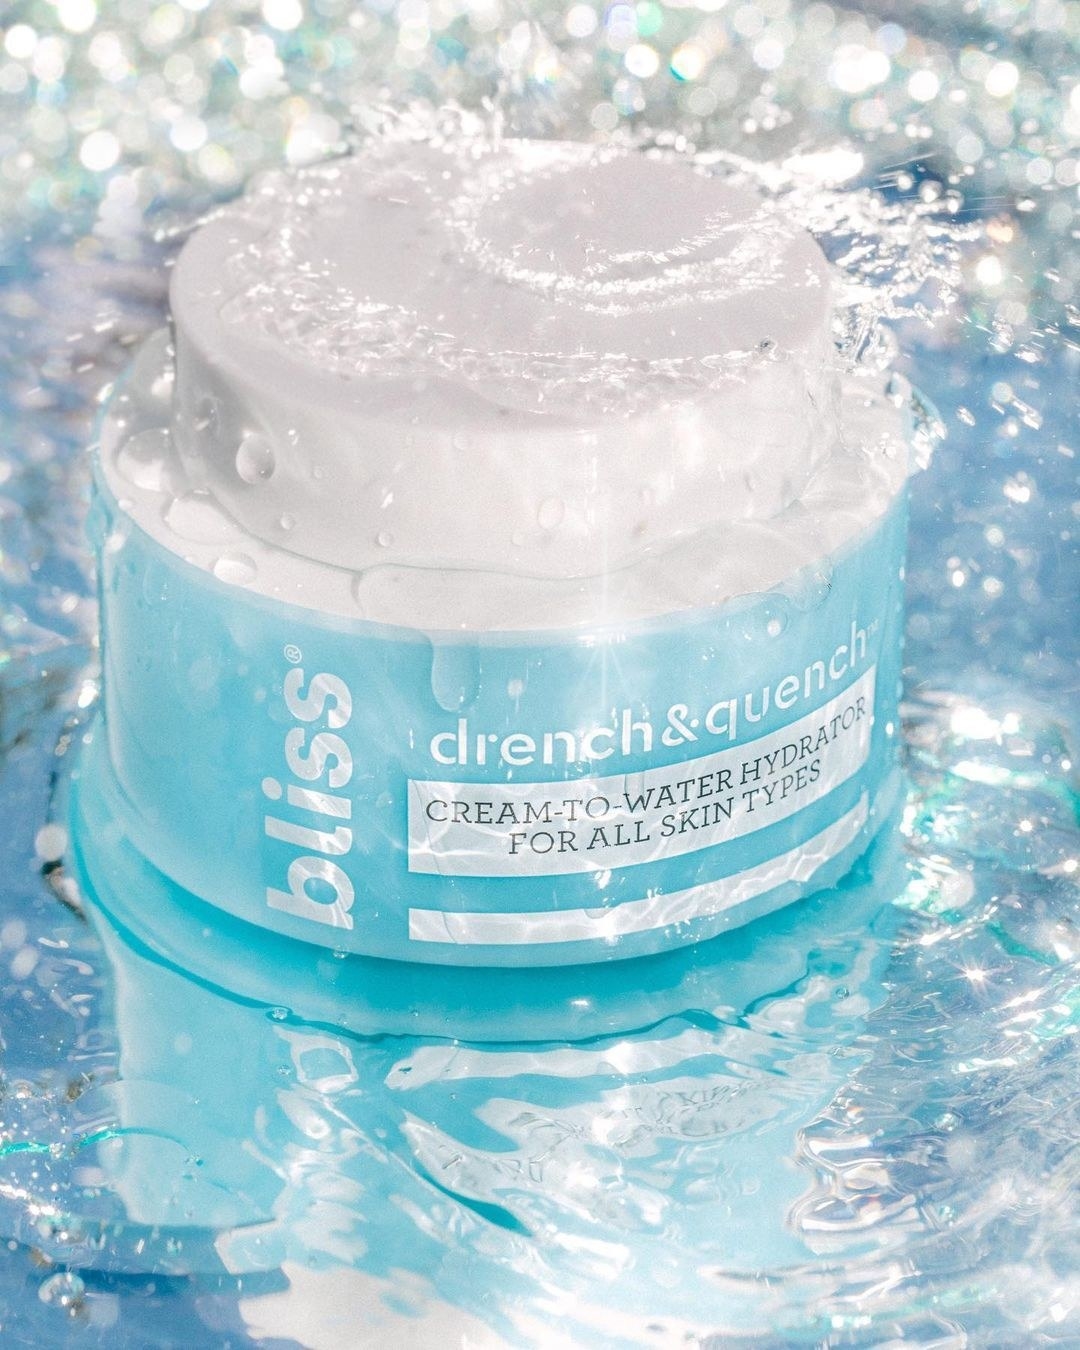 A blue jar of moisturizing cream in splashing water